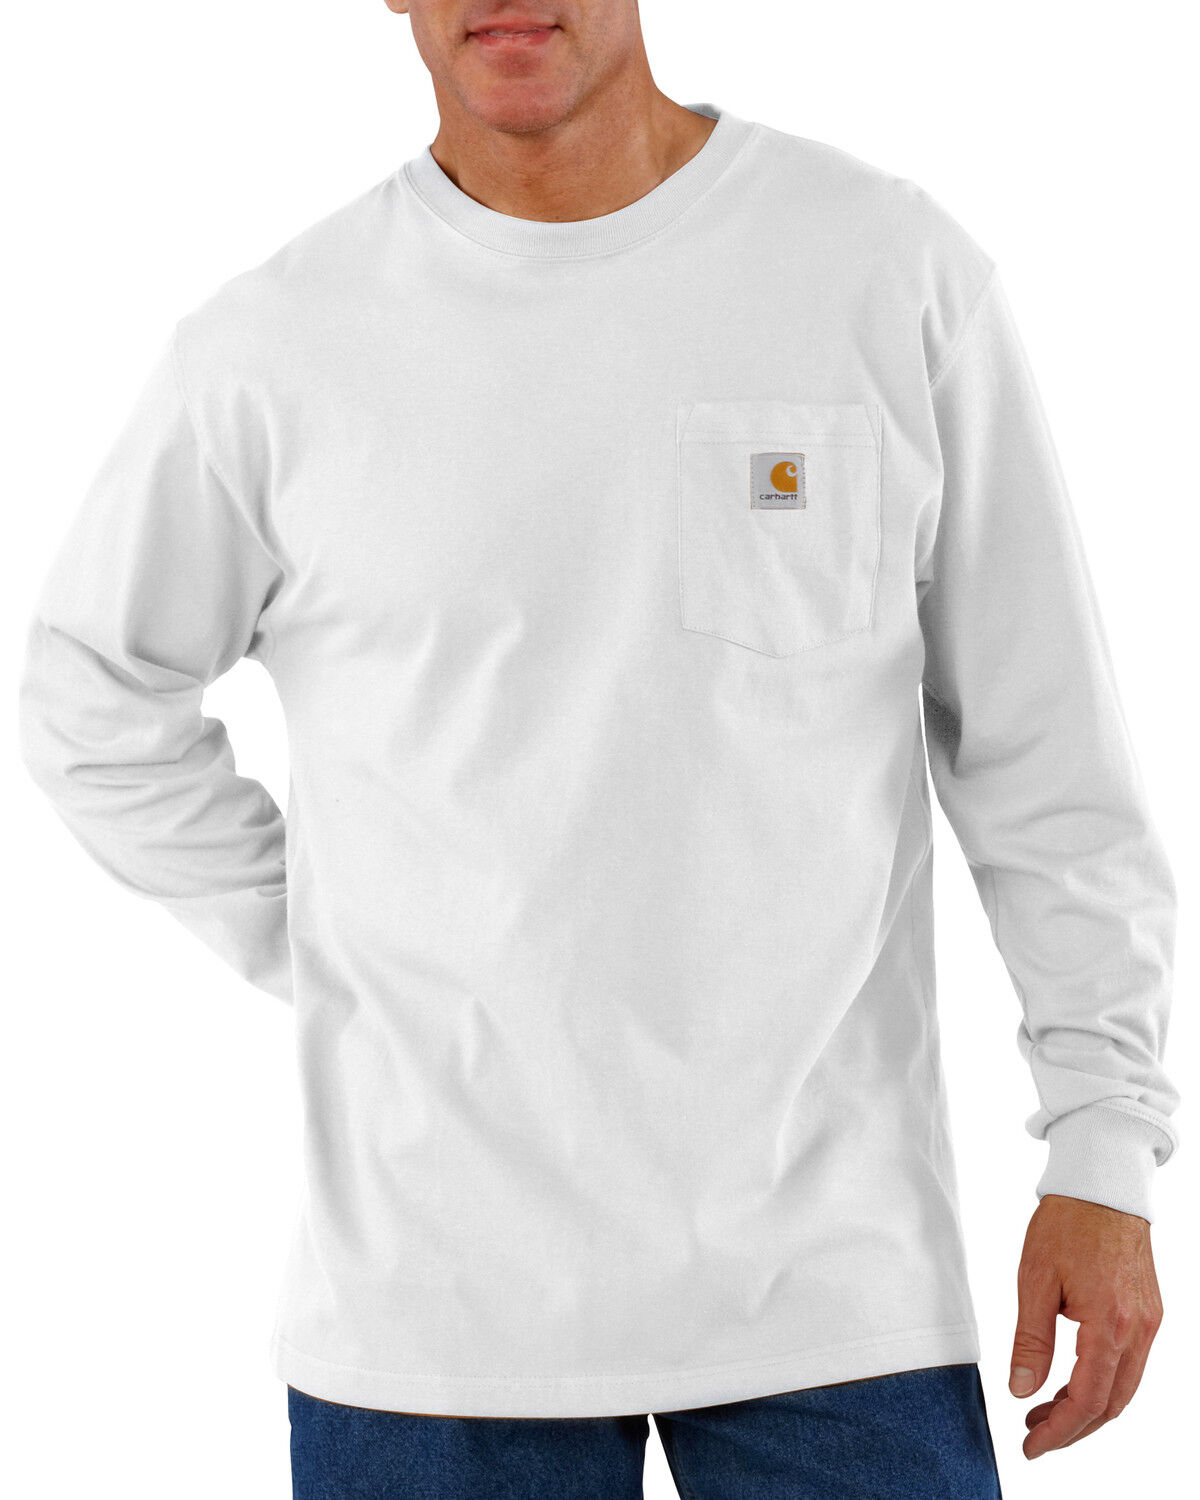 carhartt white pocket t shirt